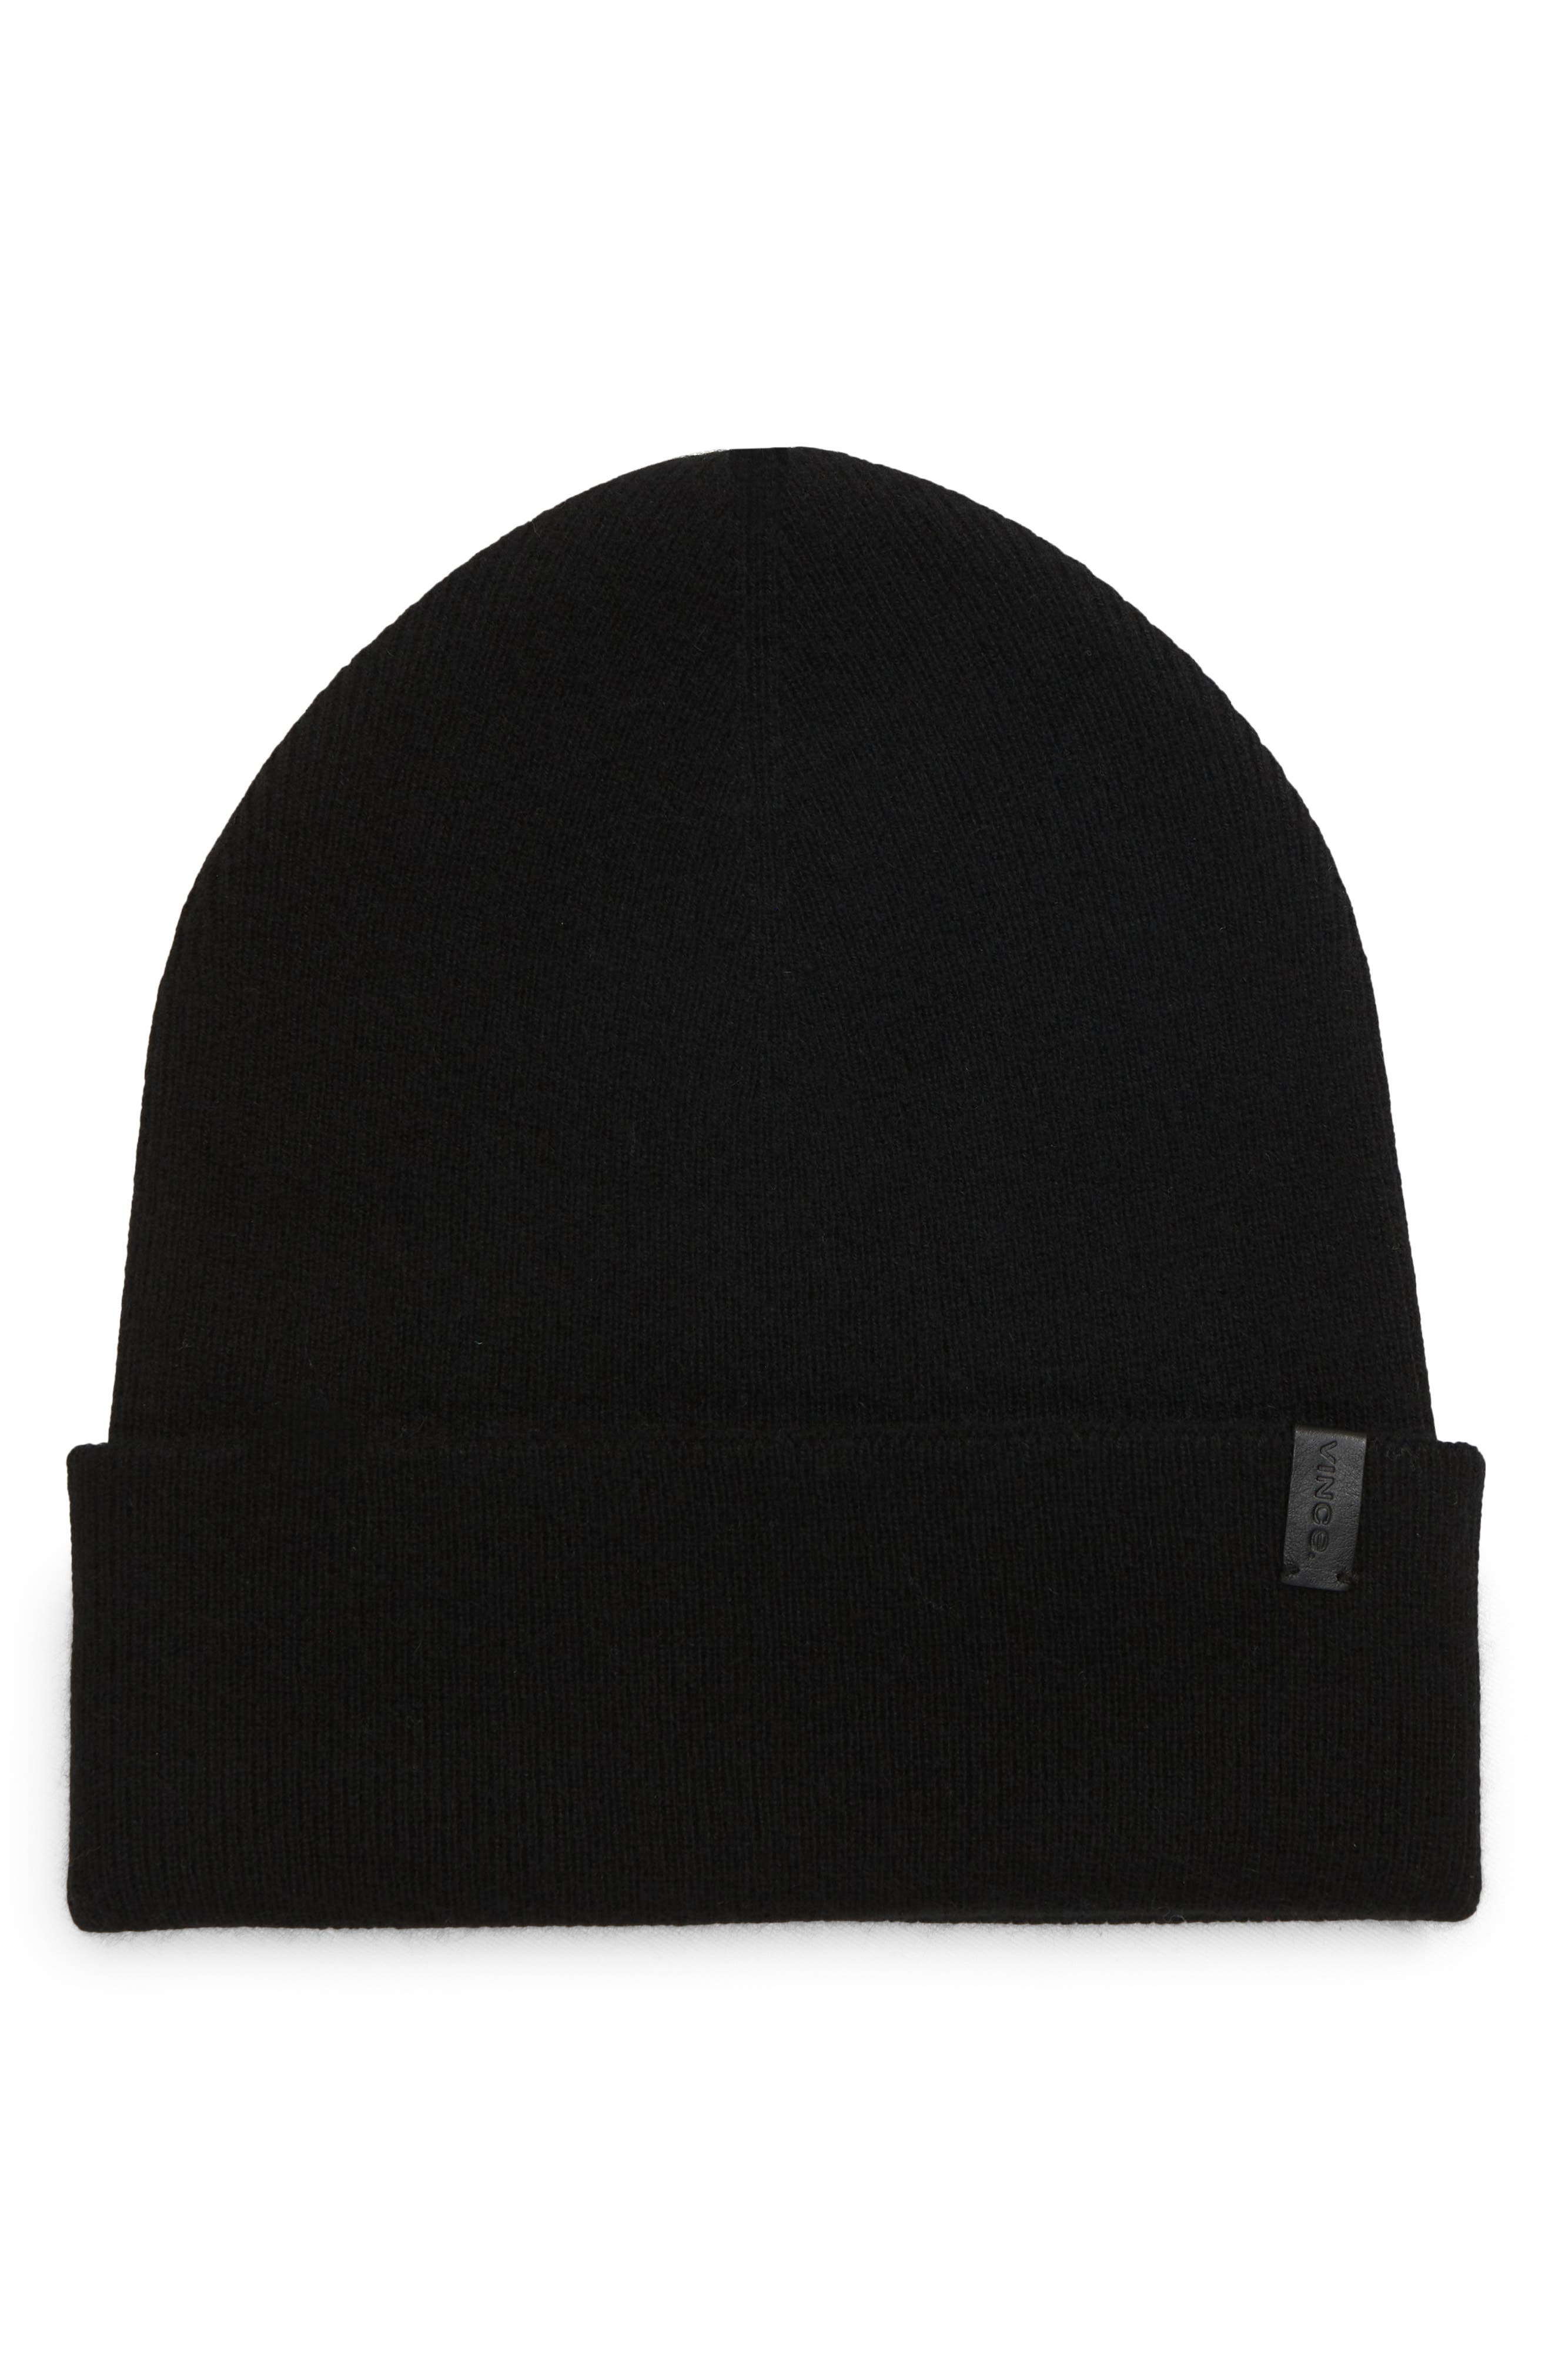 Accessories Hats & Caps Winter Hats Pure Cashmere Reversible Two Toned Double Face Unisex Beanie Hat 